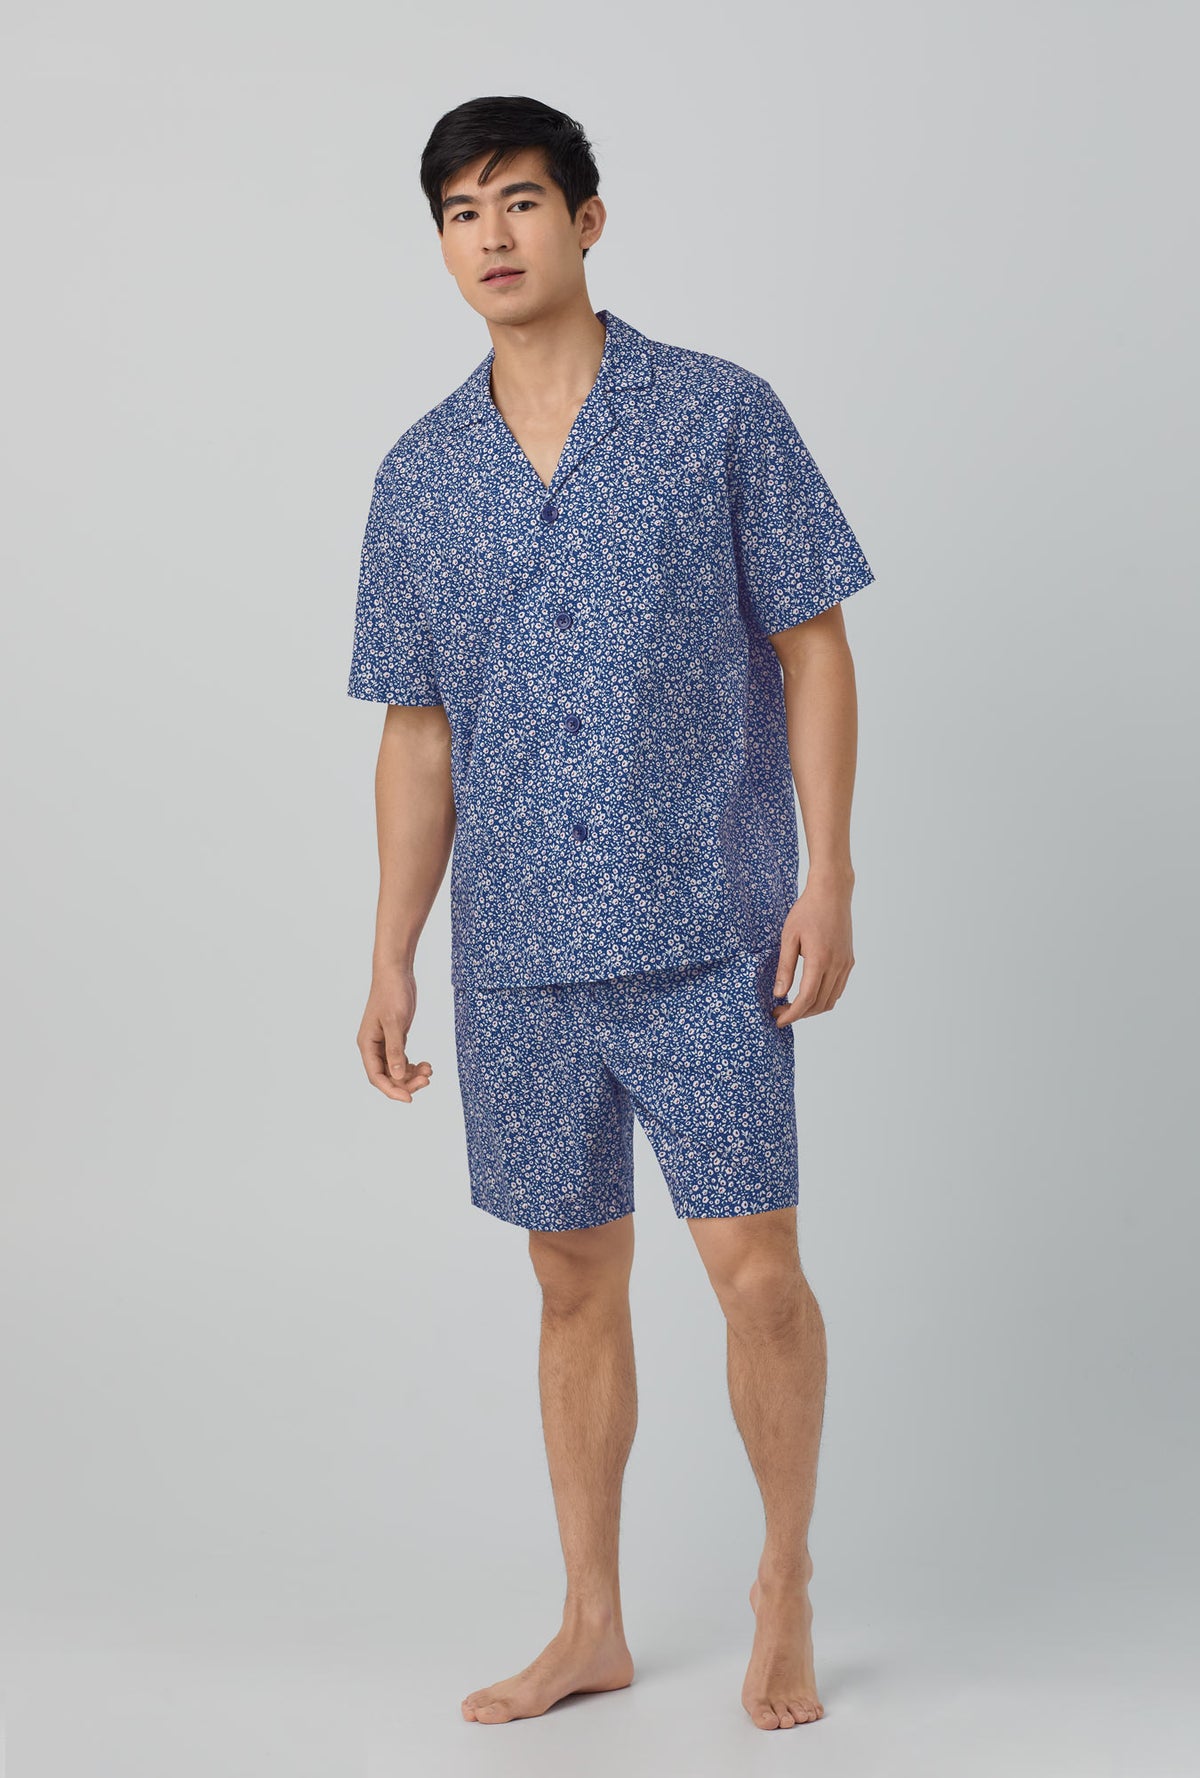 A men wearing blue Short Sleeve Notch Woven Cotton Poplin Boxer PJ Set with Sprout print